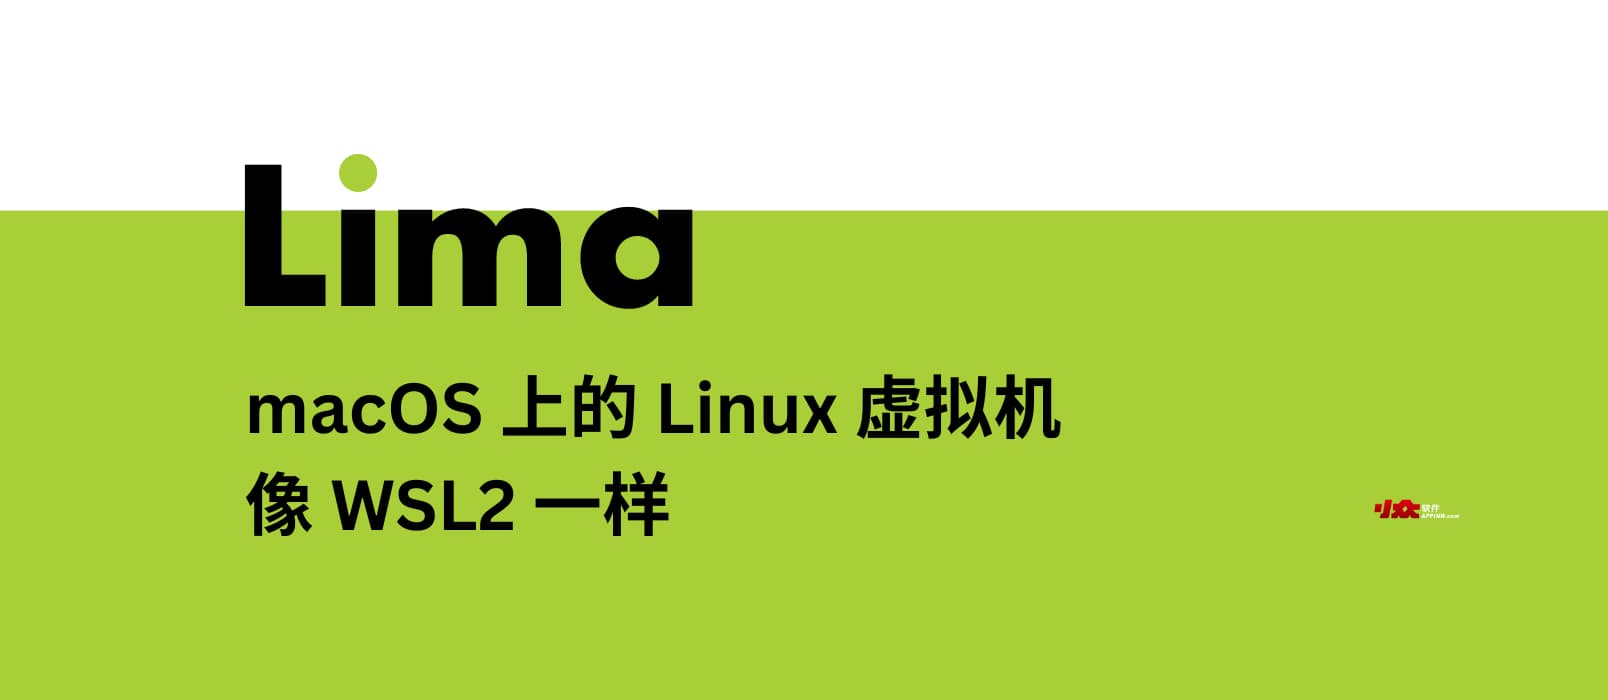 Lima - macOS 上的 Linux 虚拟机，像 WSL2 一样